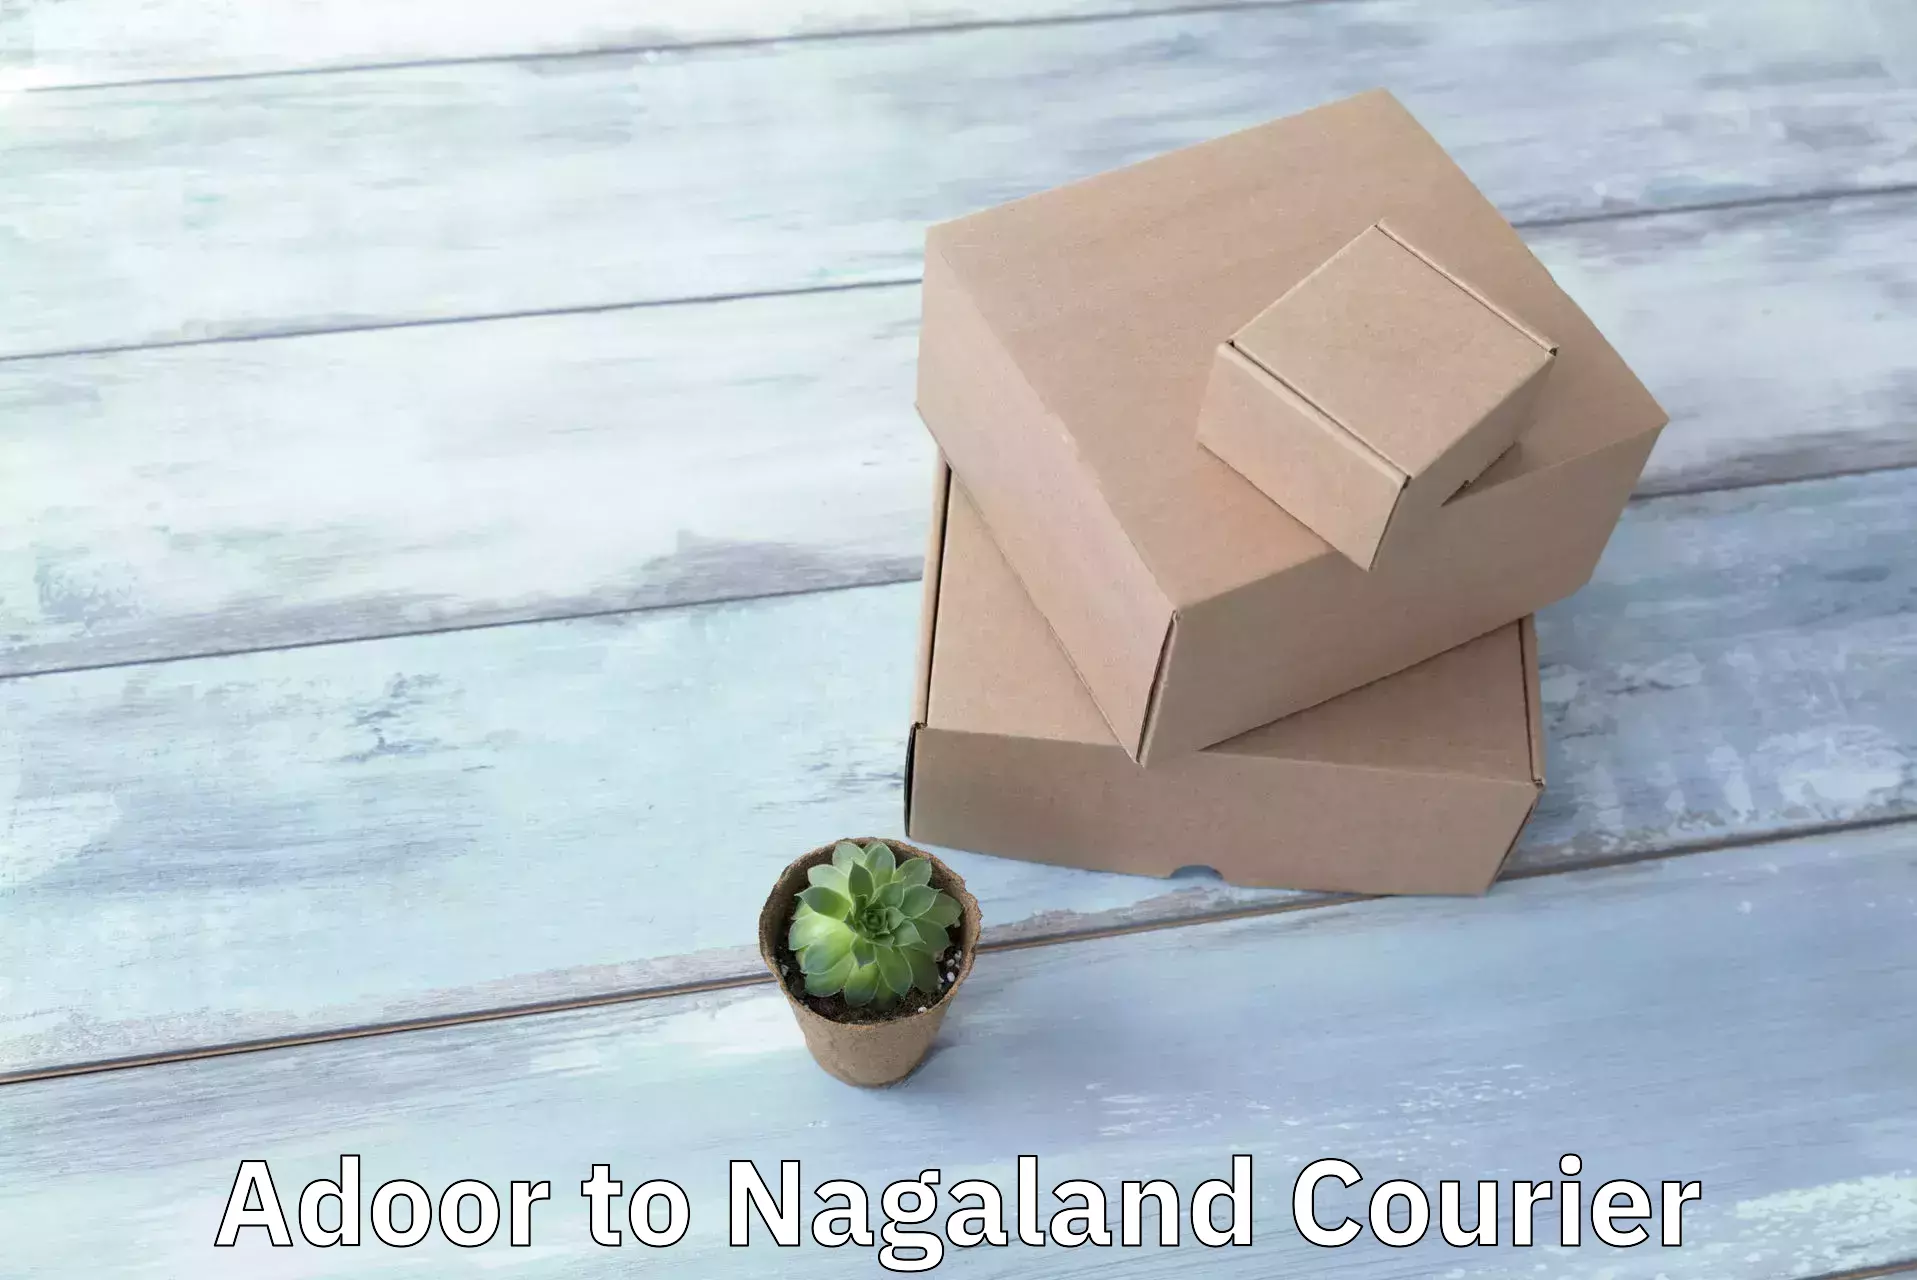 Premium delivery services Adoor to Nagaland